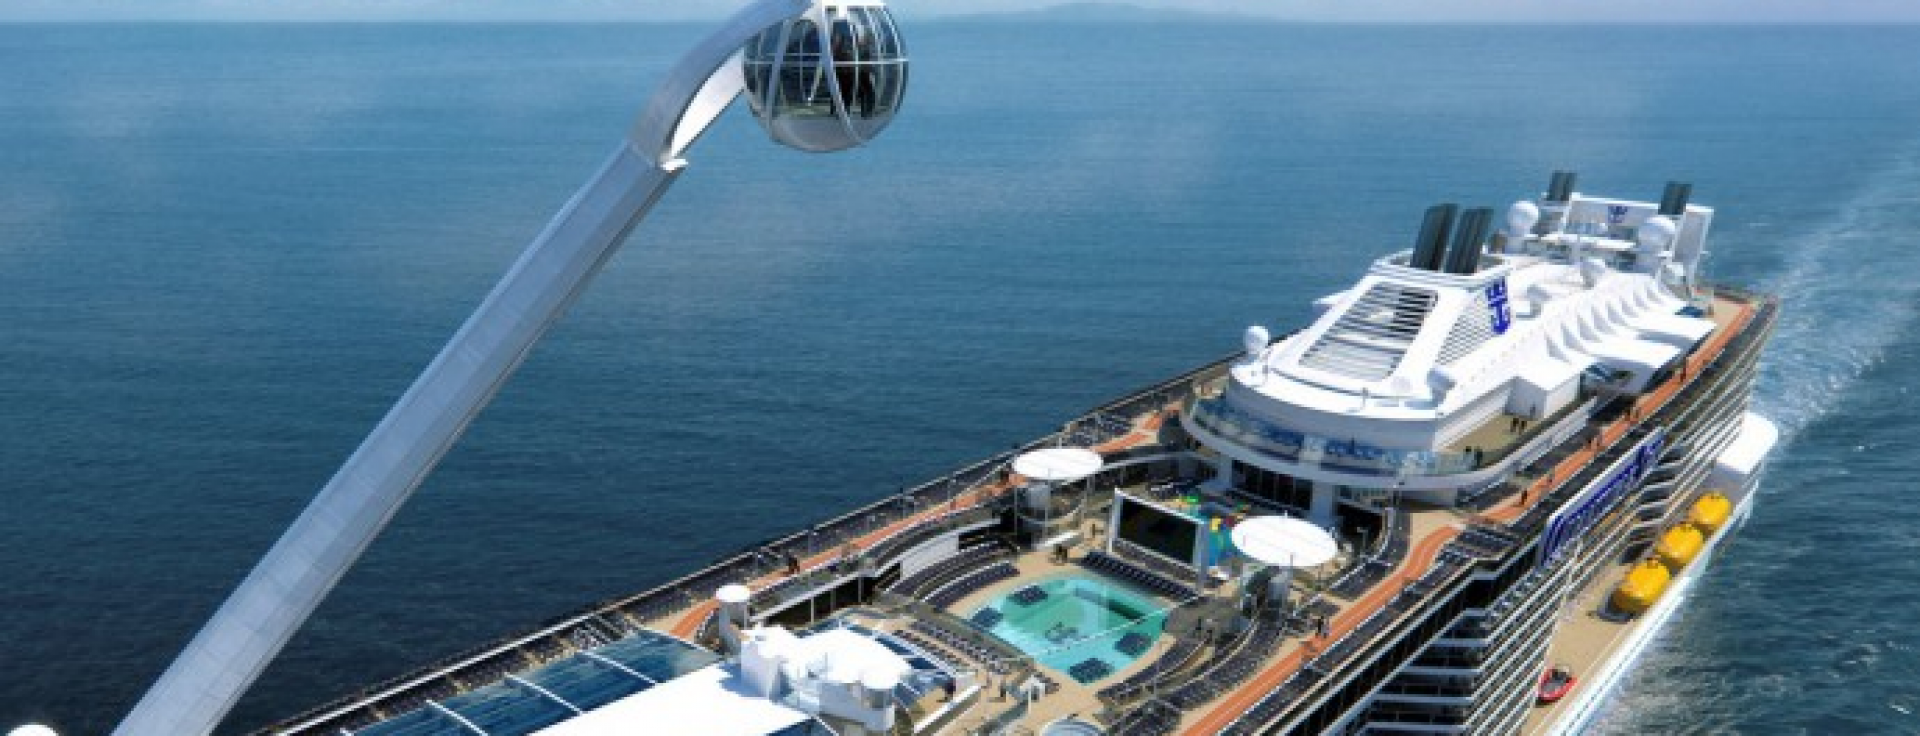 Royal Caribbean, mega cruises voor lol met de familie | Cruisemarkt